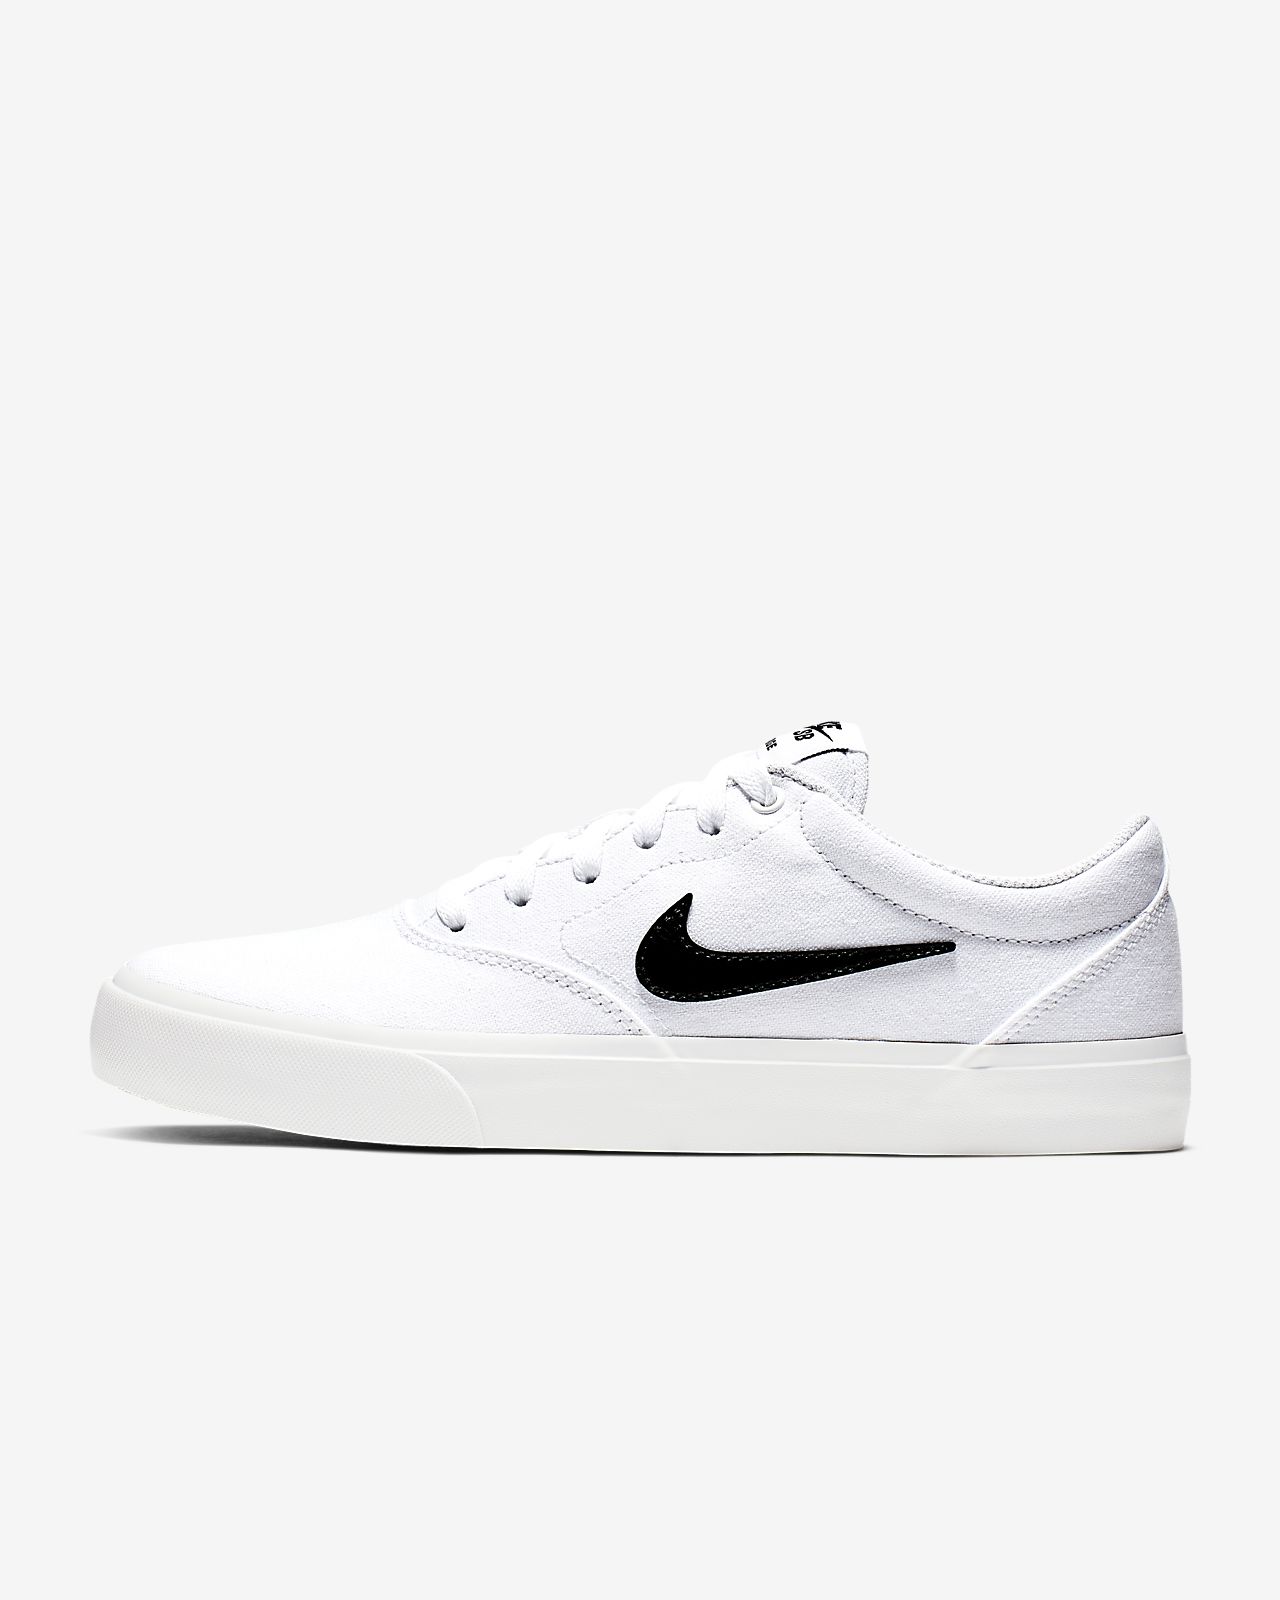 white canvas skate shoes